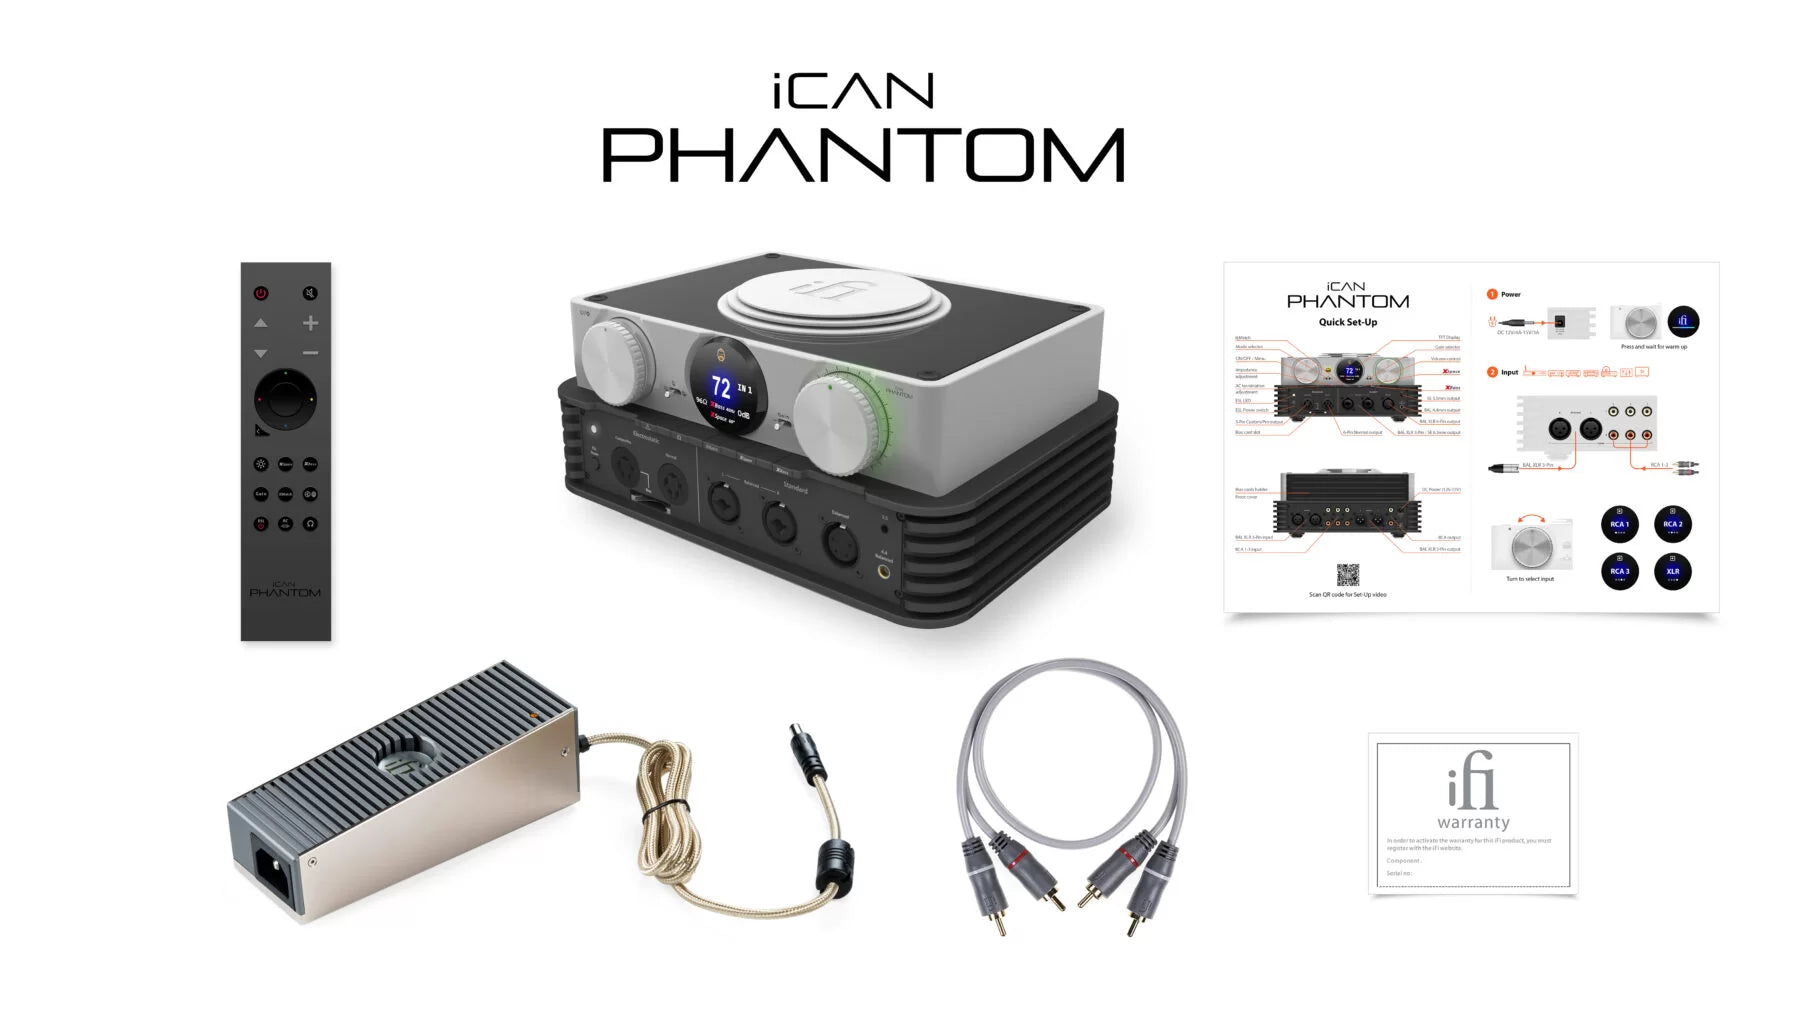 Ican Phantom - On request